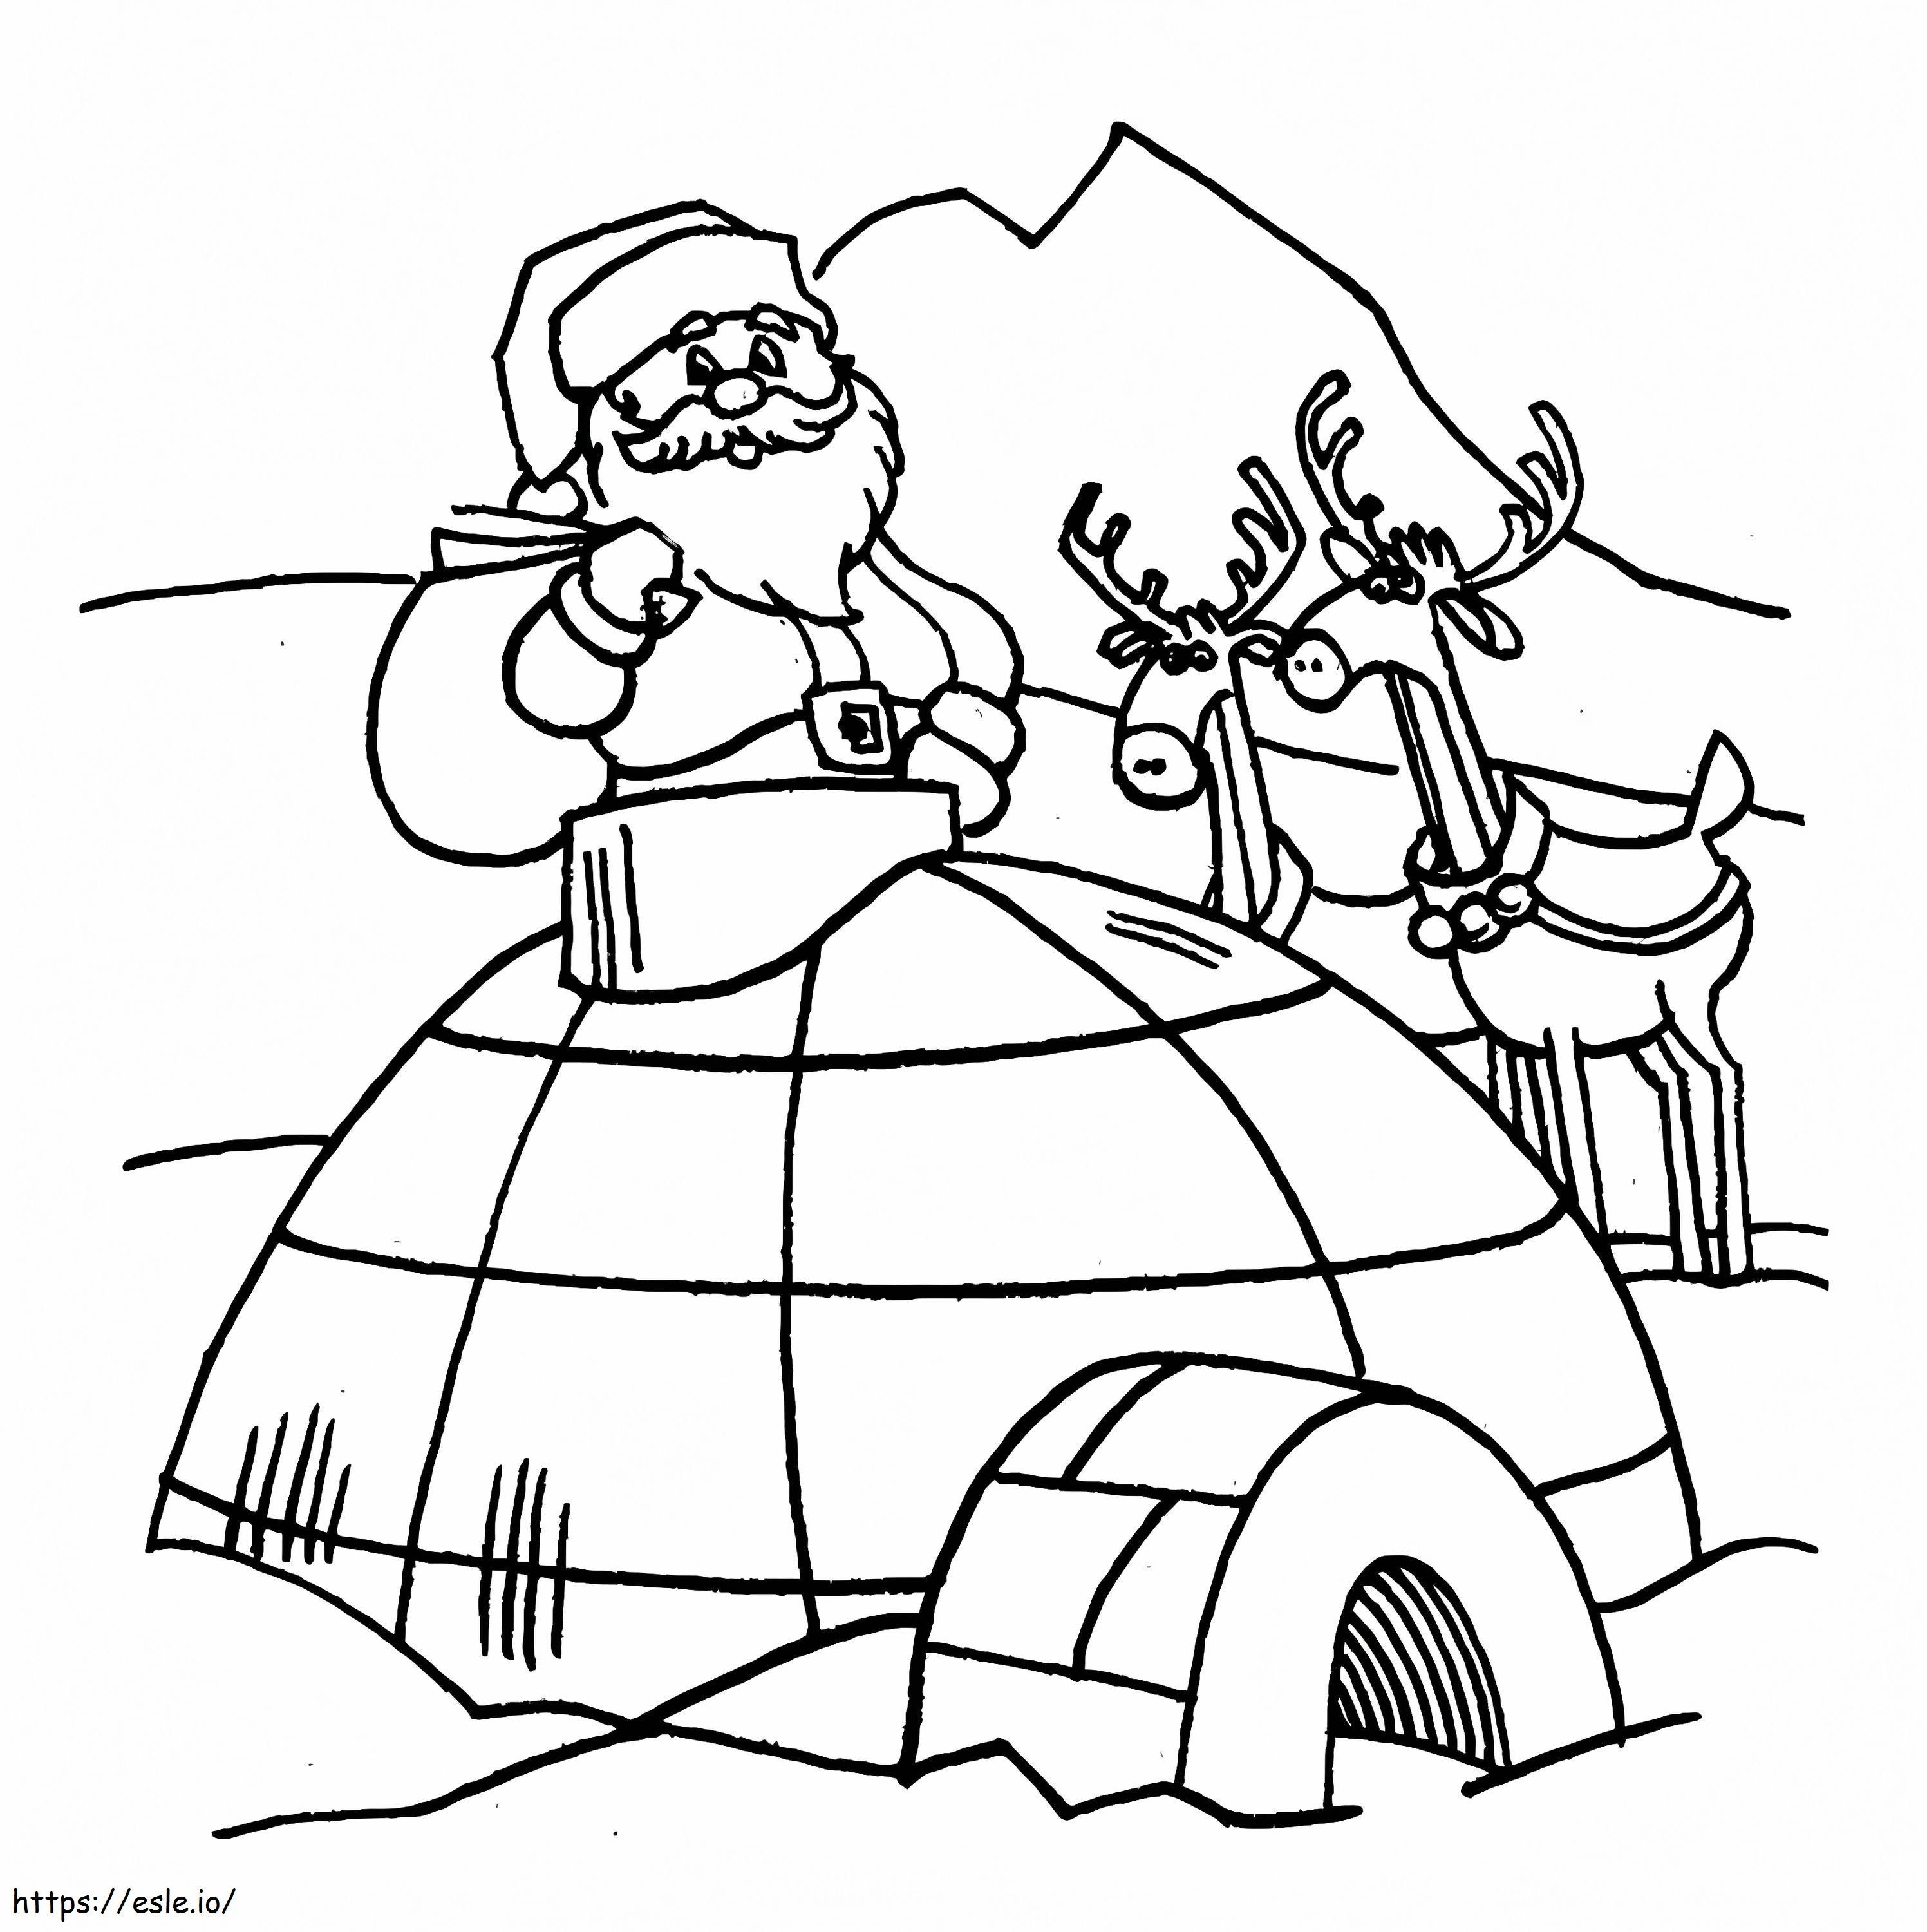 Santa With Igloo coloring page